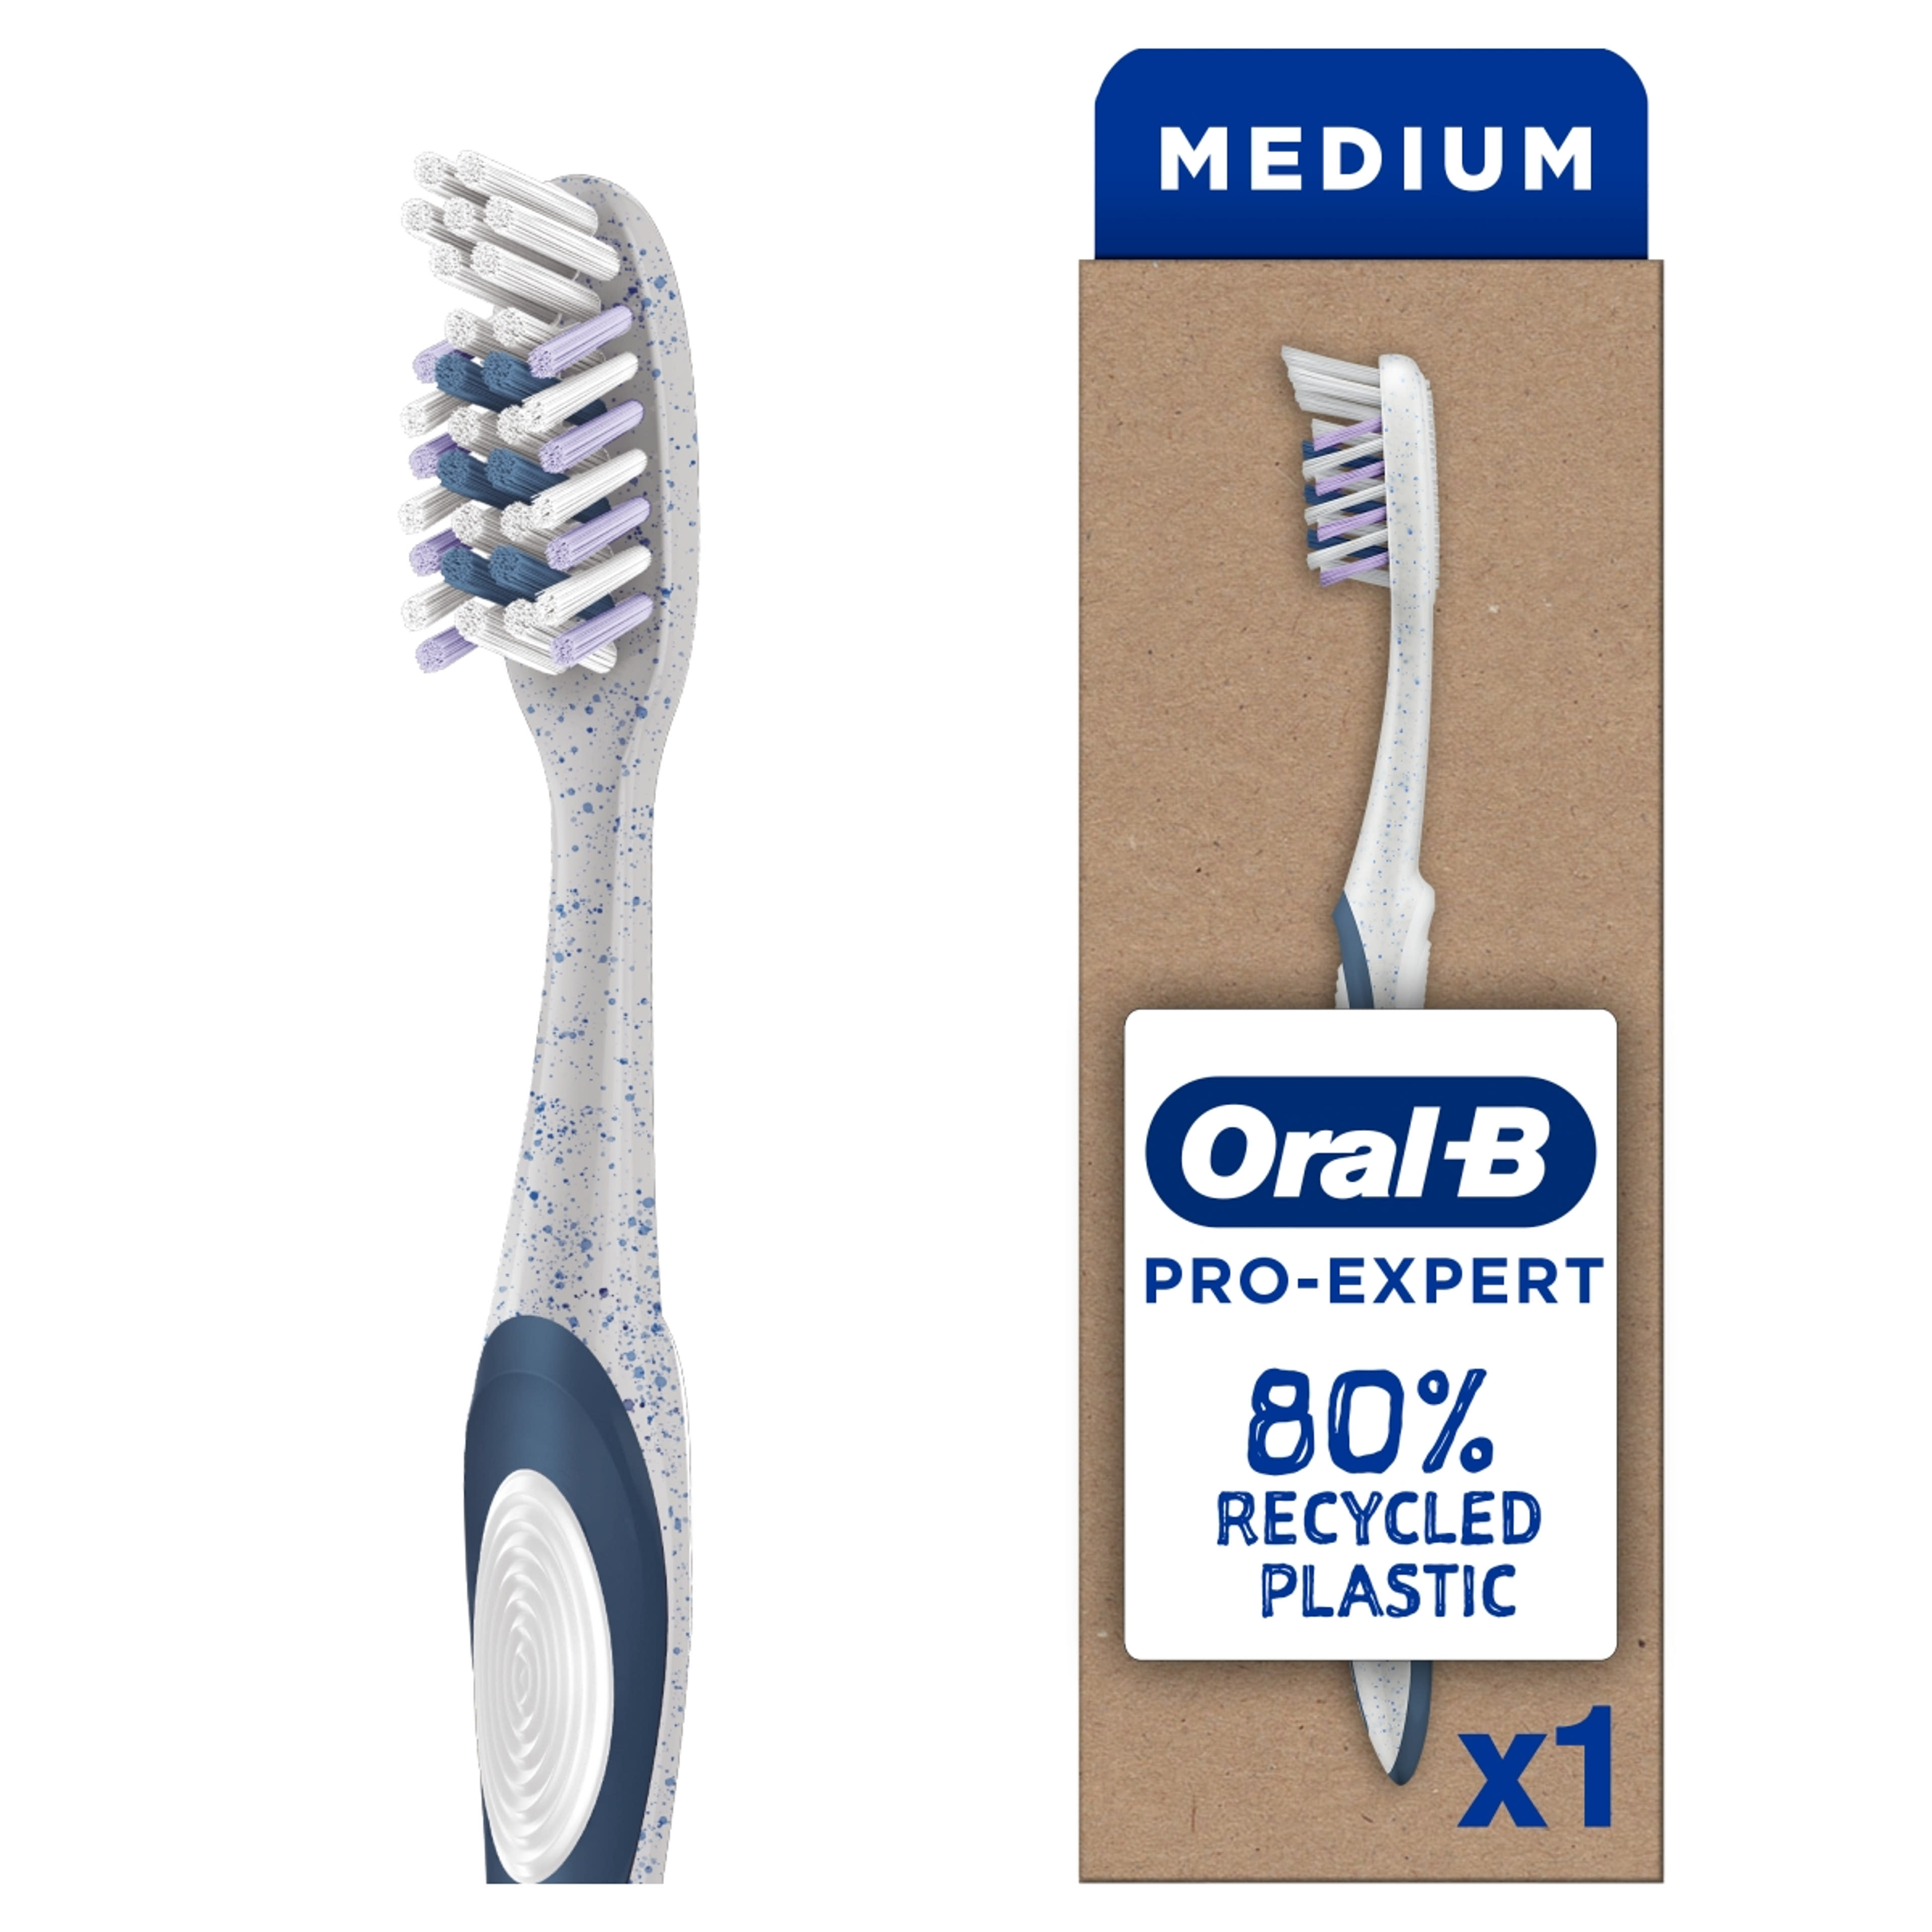 Oral-B Pro-Expert Extra Cleaneco Edition Medium fogkefe - 2 db-9